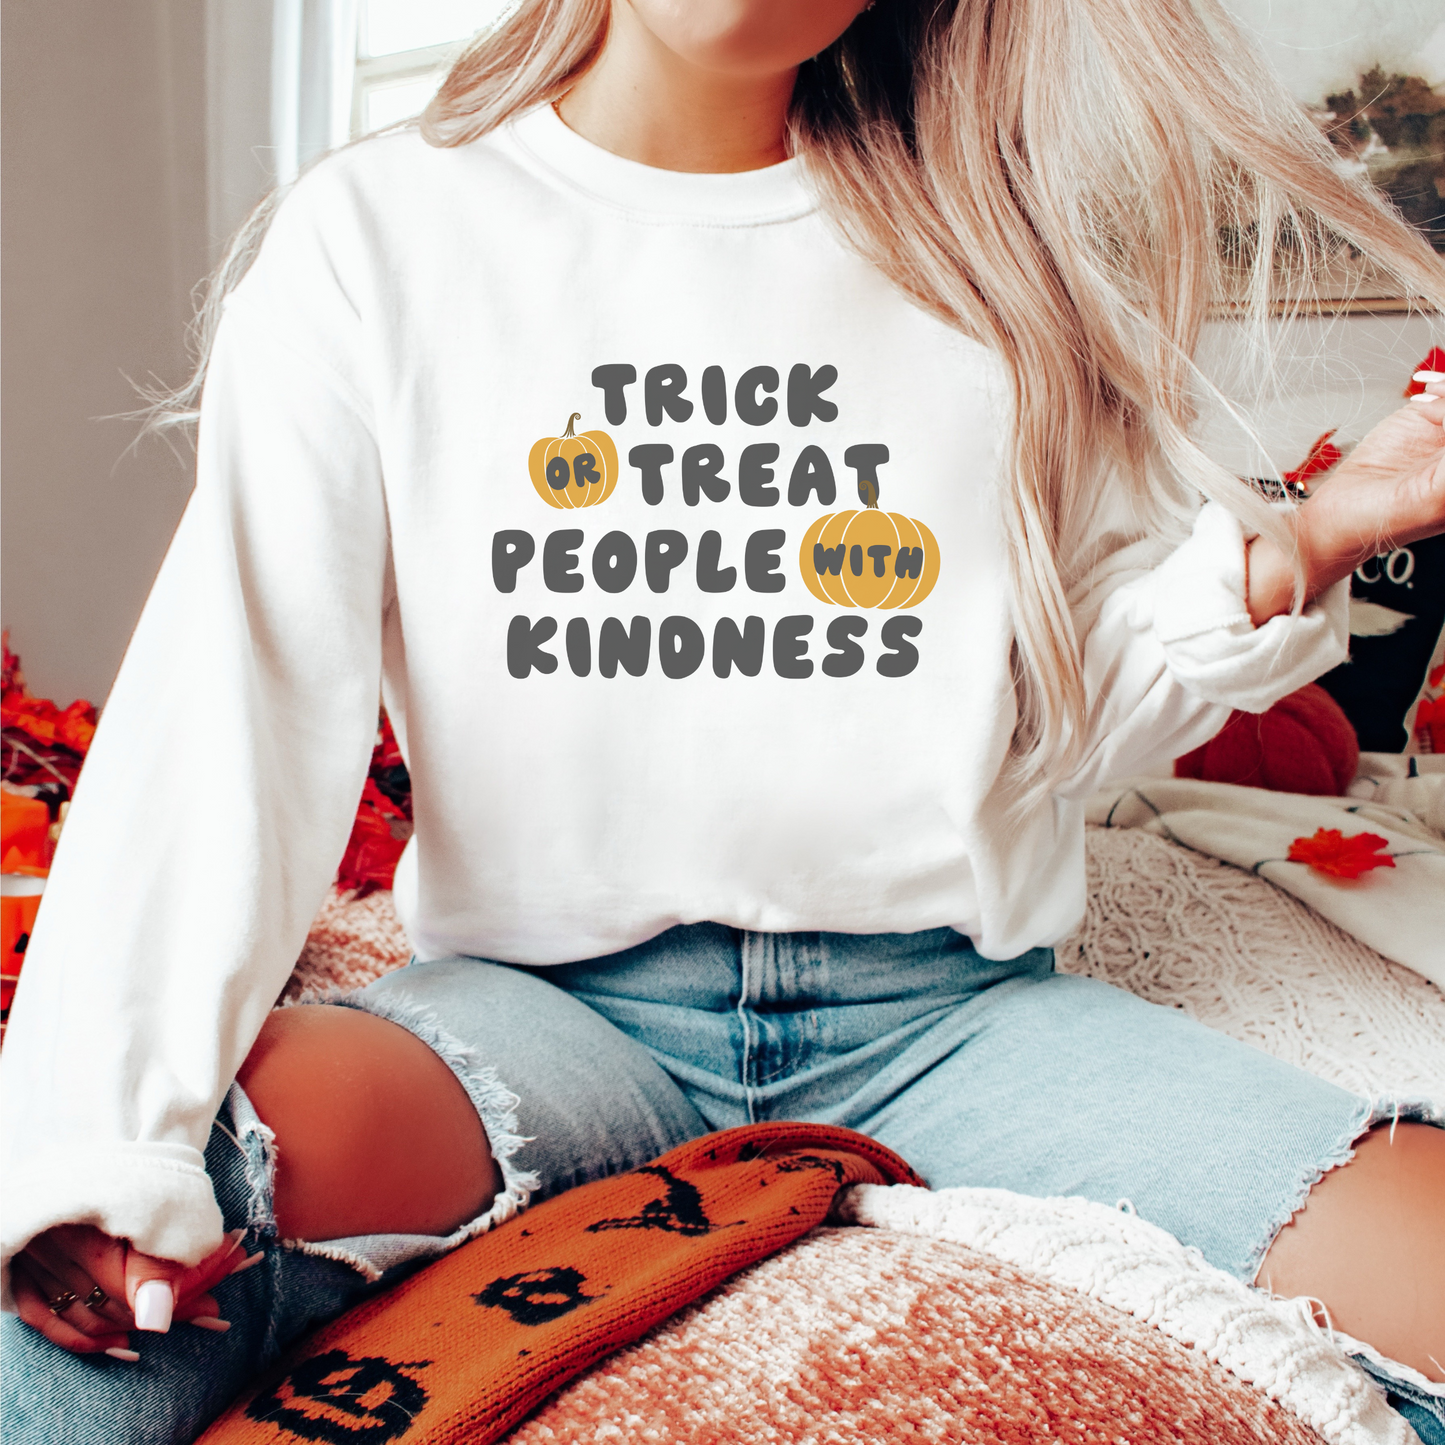 Trick or Treat People With Kindness Crewneck Sweatshirt